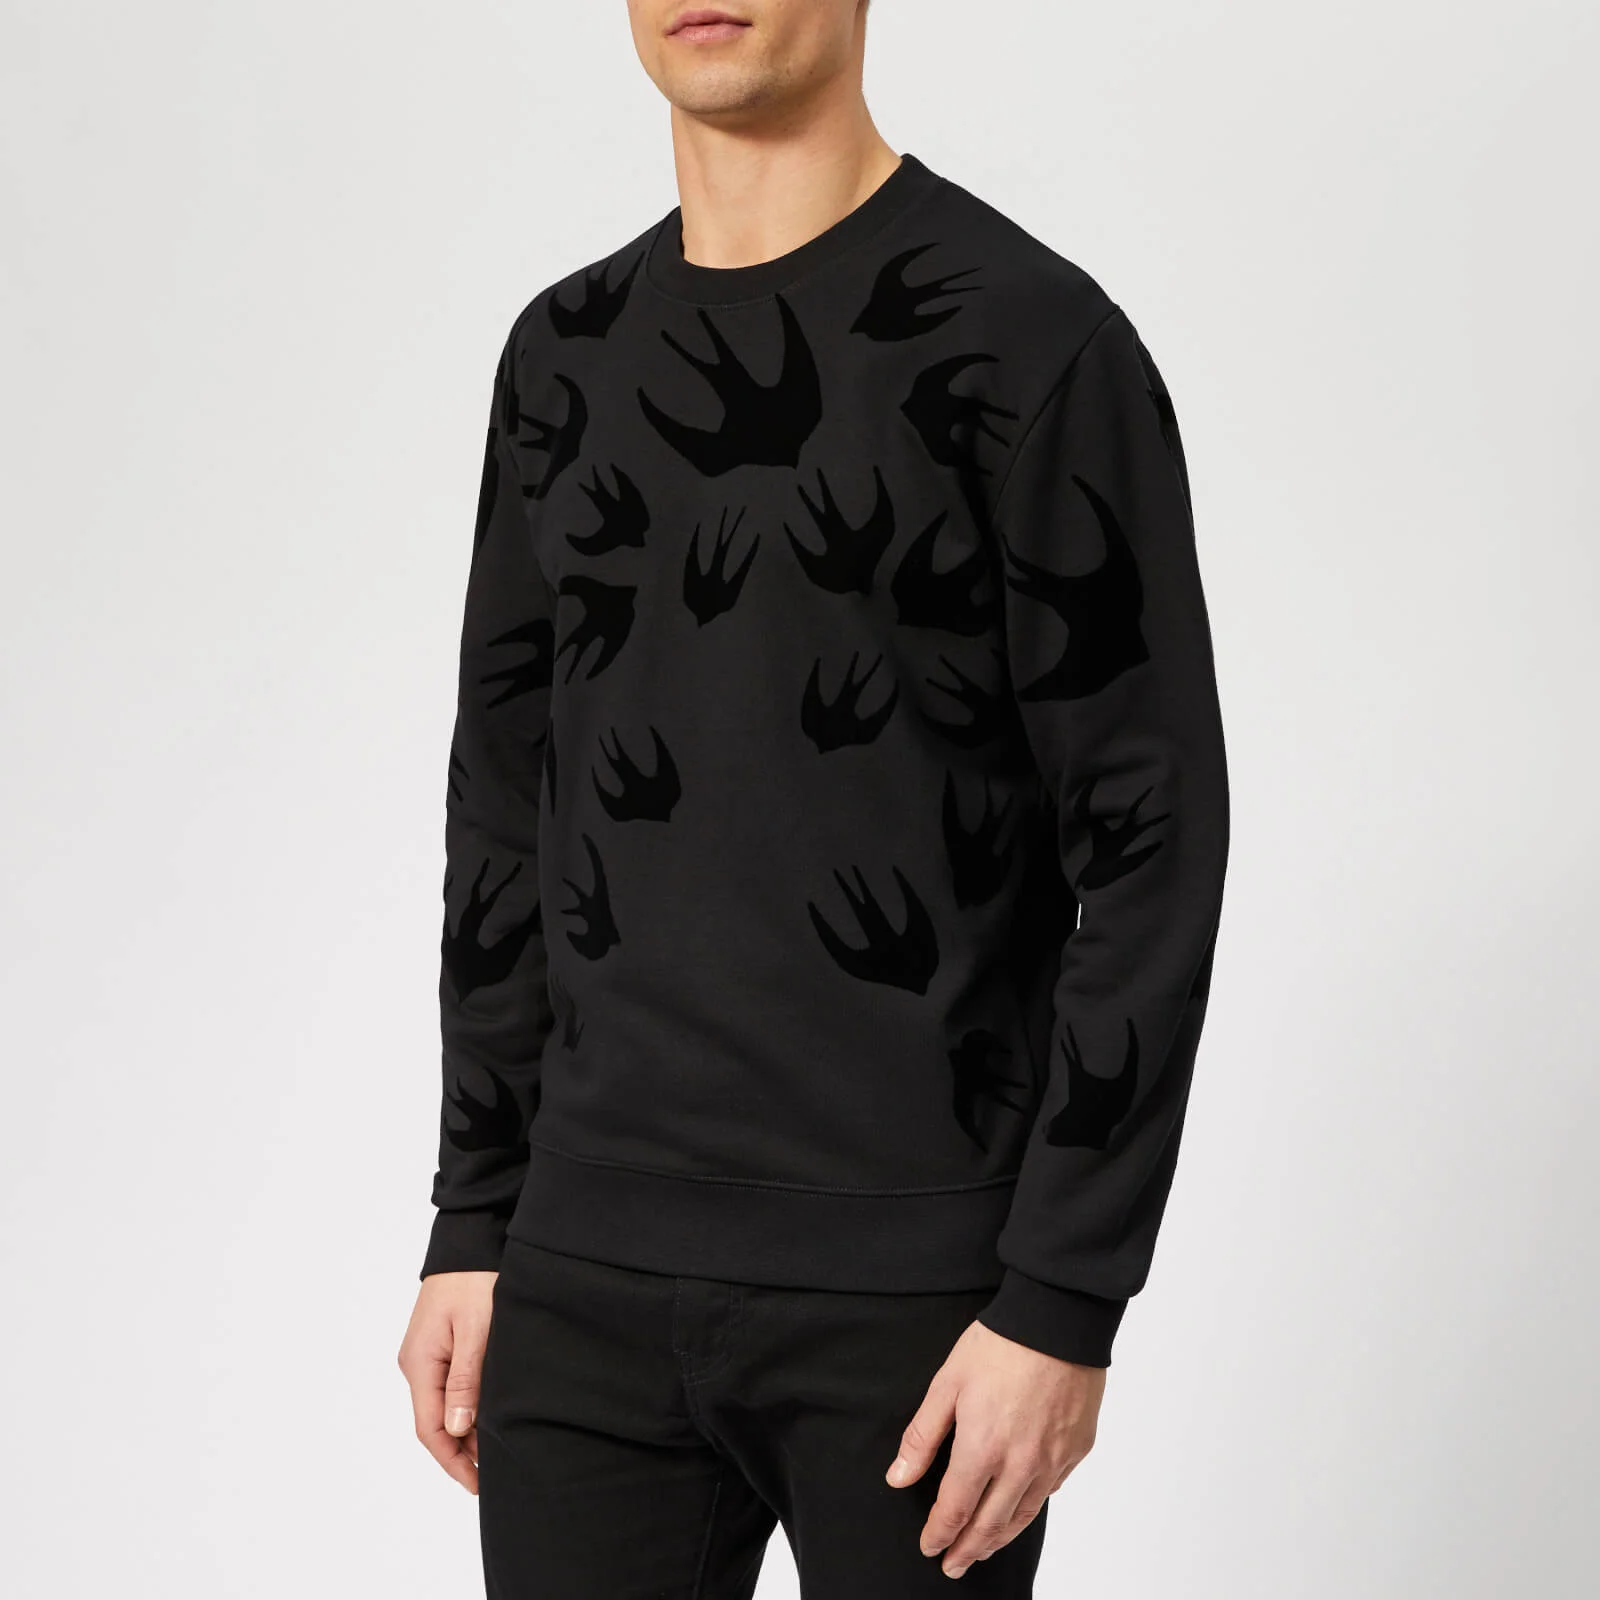 McQ Alexander McQueen Men's Swallow Swarm Sweatshirt - Darkest Black Image 1